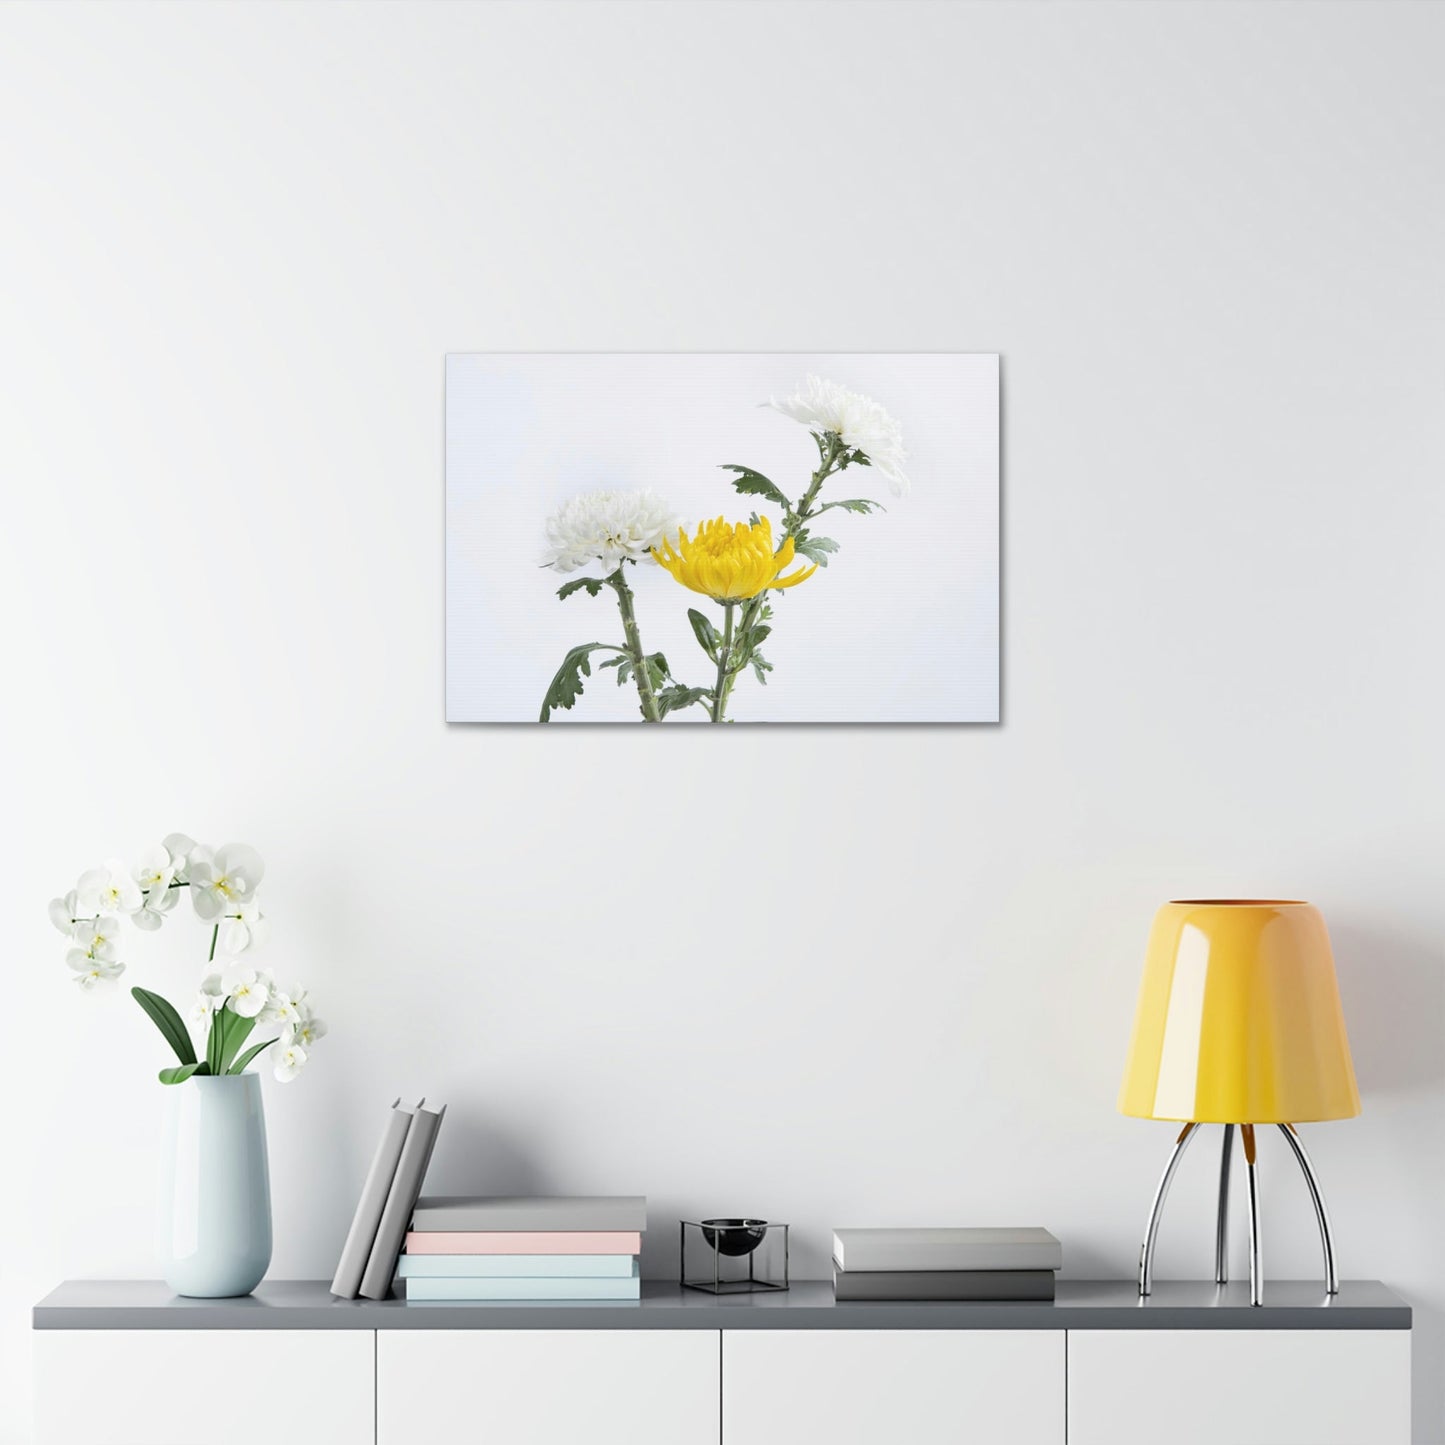 Floral Bliss: Poster & Canvas Art with Joyful Chrysanthemum Bouquet